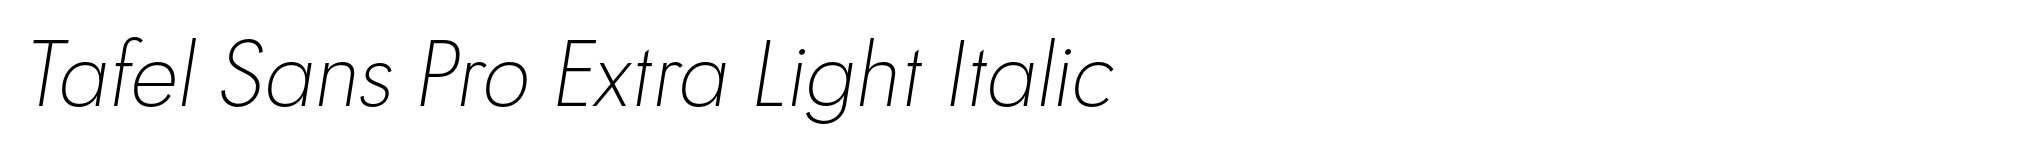 Tafel Sans Pro Extra Light Italic image